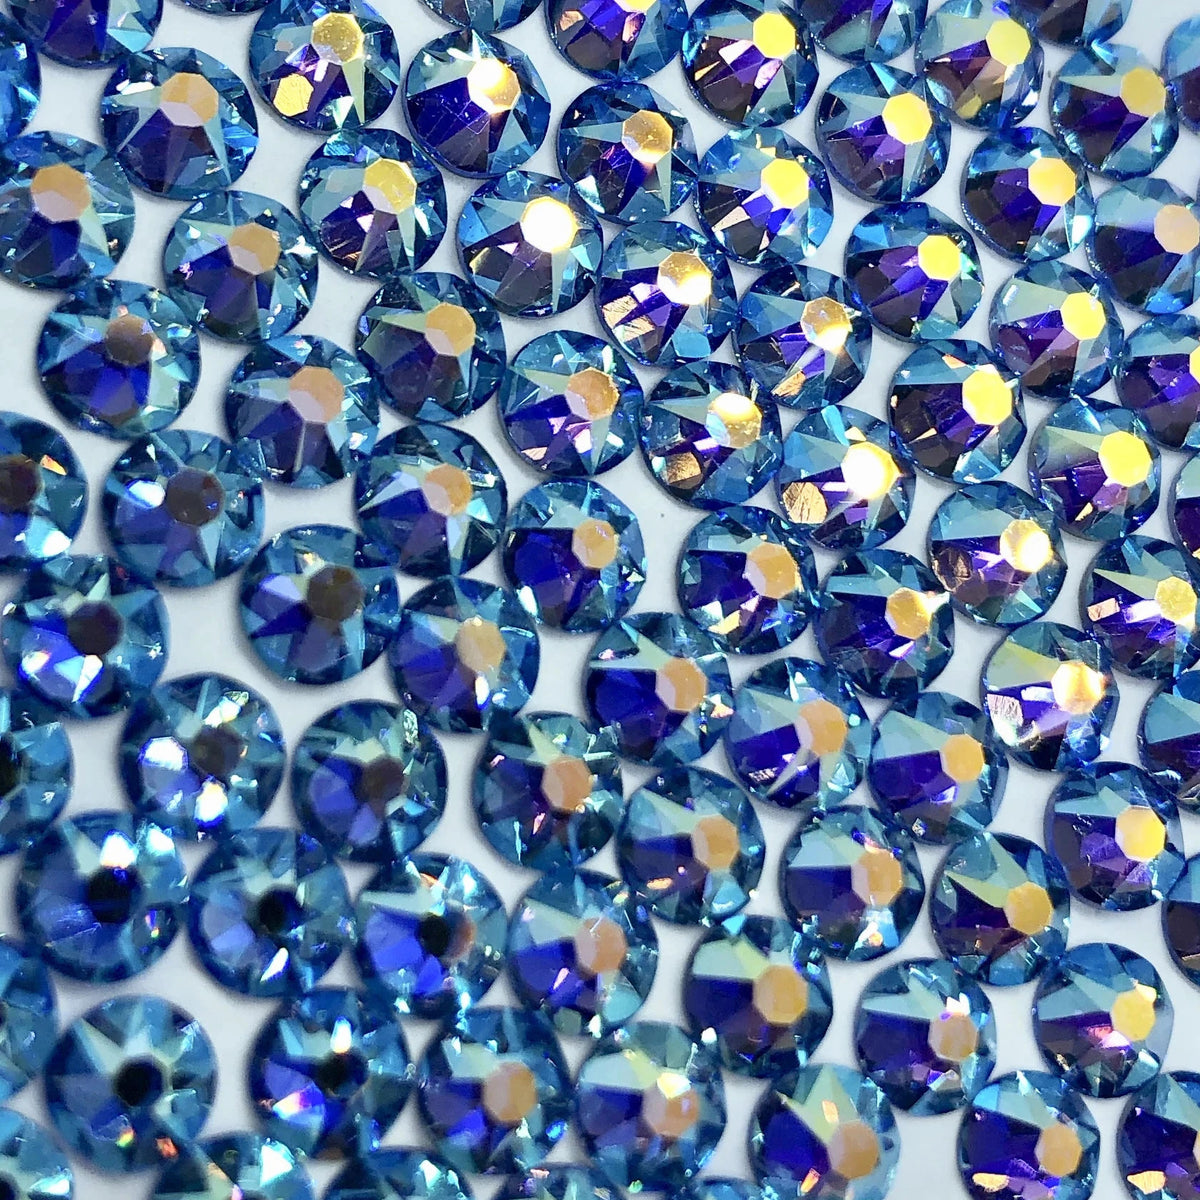 qiipii 3000pcs 5mm Crystal Light Blue Resin Rhinestones for Crafts Sky Blue Flatback Rhinestones Bulk SS20 Non-Hotfix Stones Diamonds Crystals Gems